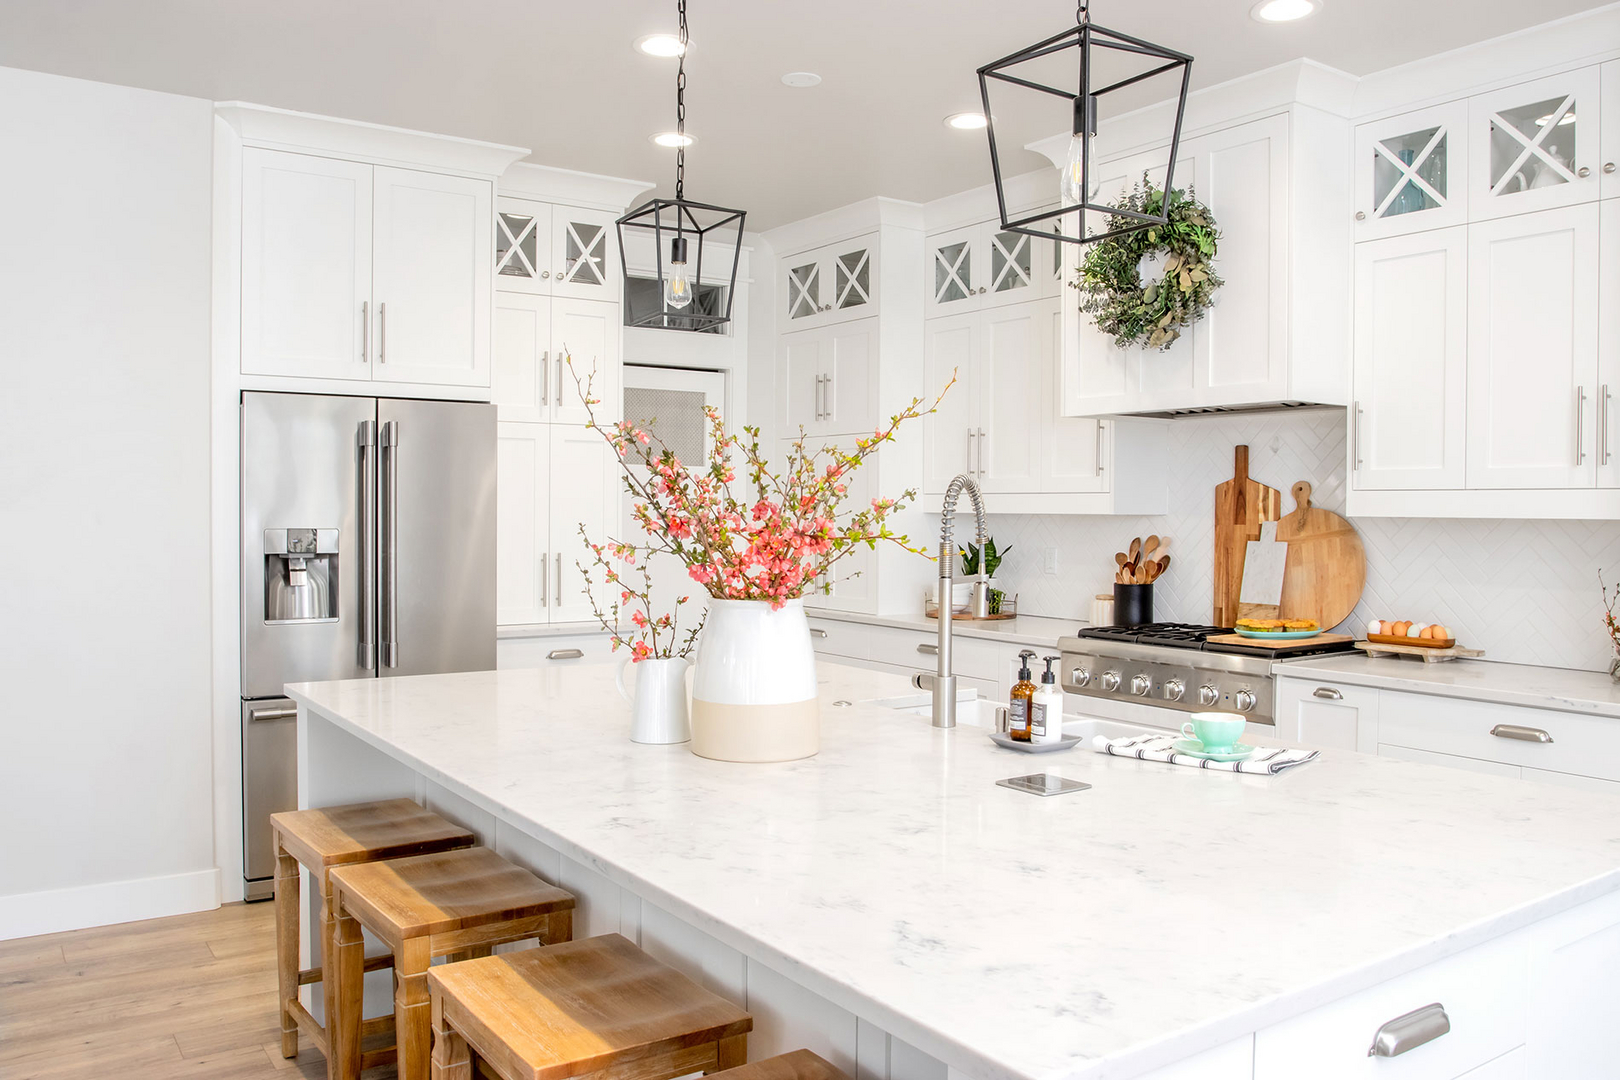 Kitchen Islands – Granite & Quartz countertops. Kitchen cabinets factory